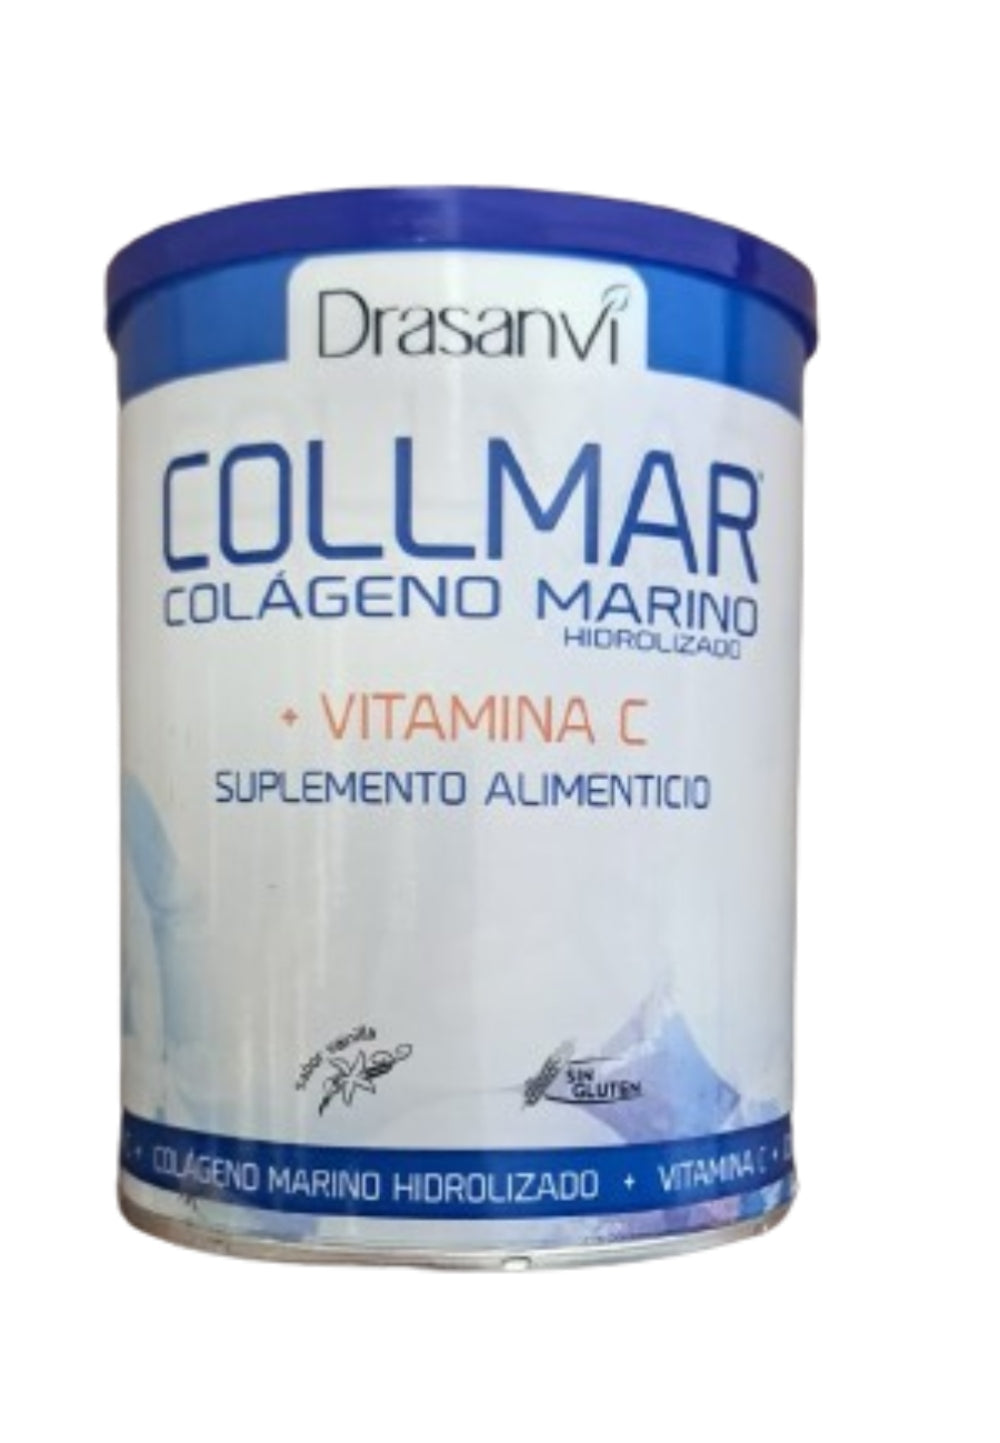 Collmar Original colágeno marino hidrolizado 275 g Drasanvi